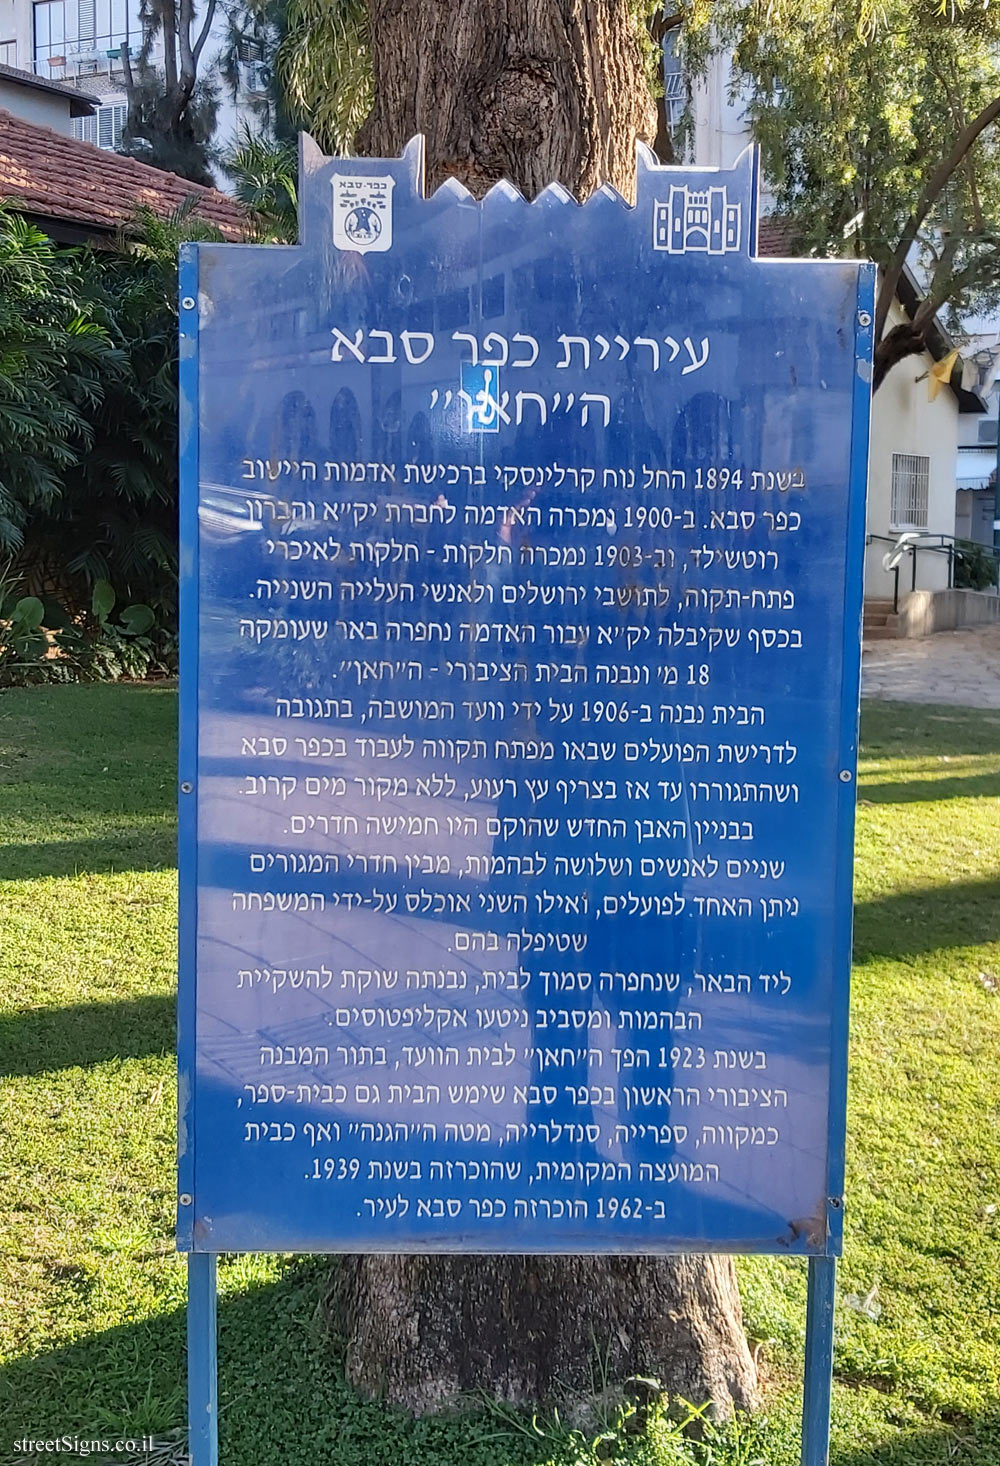 Kfar Saba - Heritage Sites in Israel - City Hall The Khan